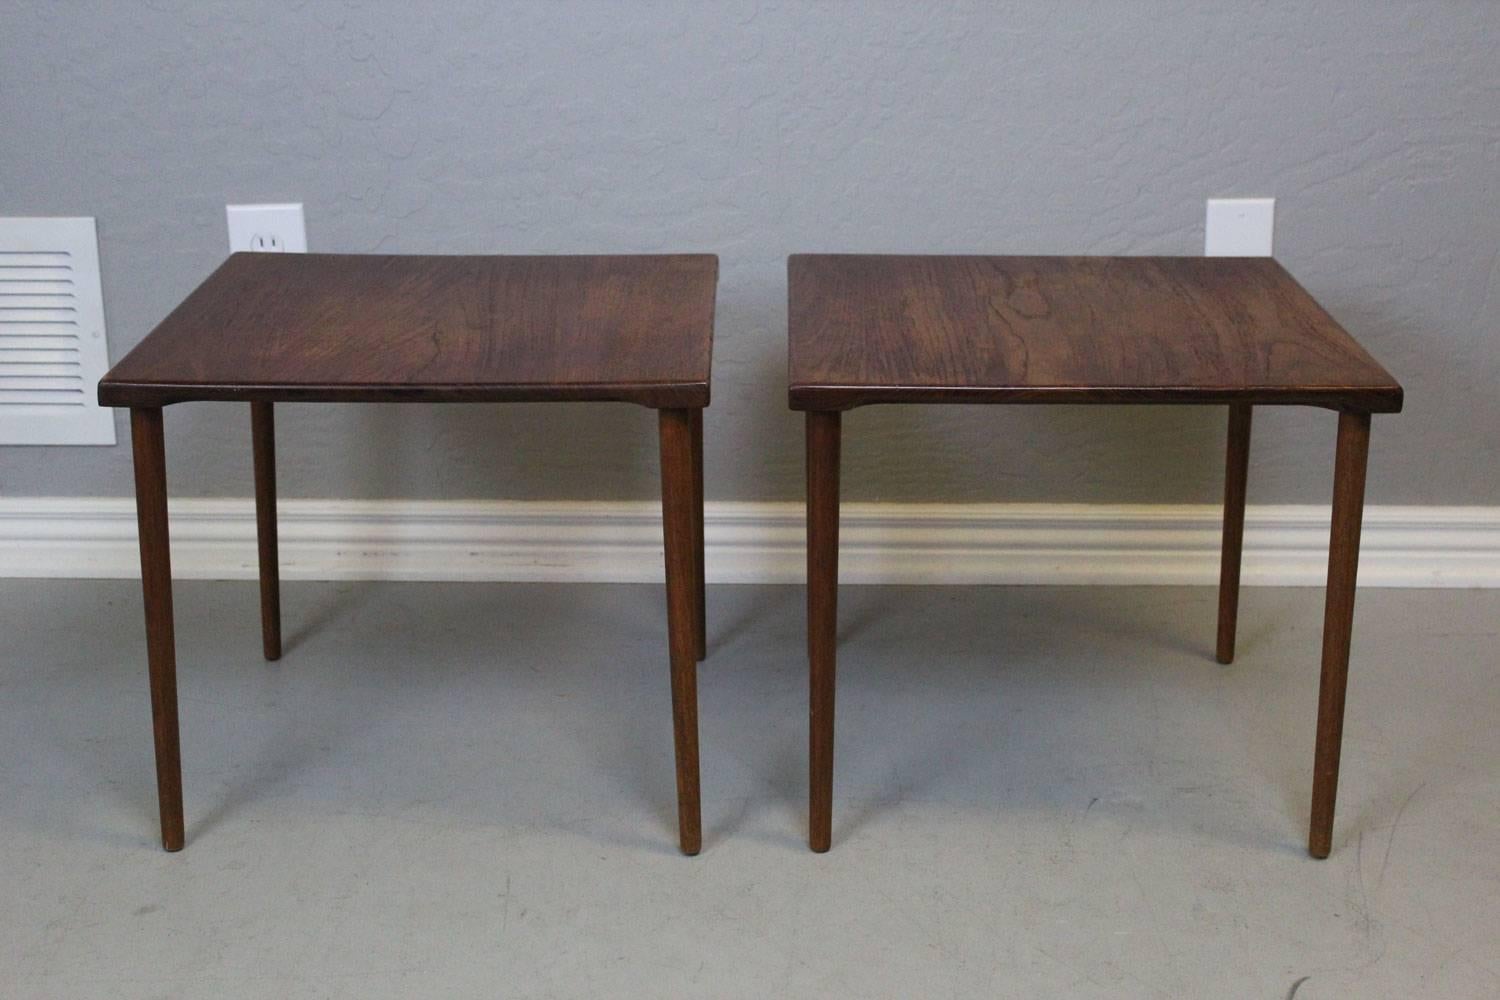 Pair of solid teak Danish modern stacking side tables by Peter Hvidt for John Stuart. Made in Denmark.

Dimensions: 18